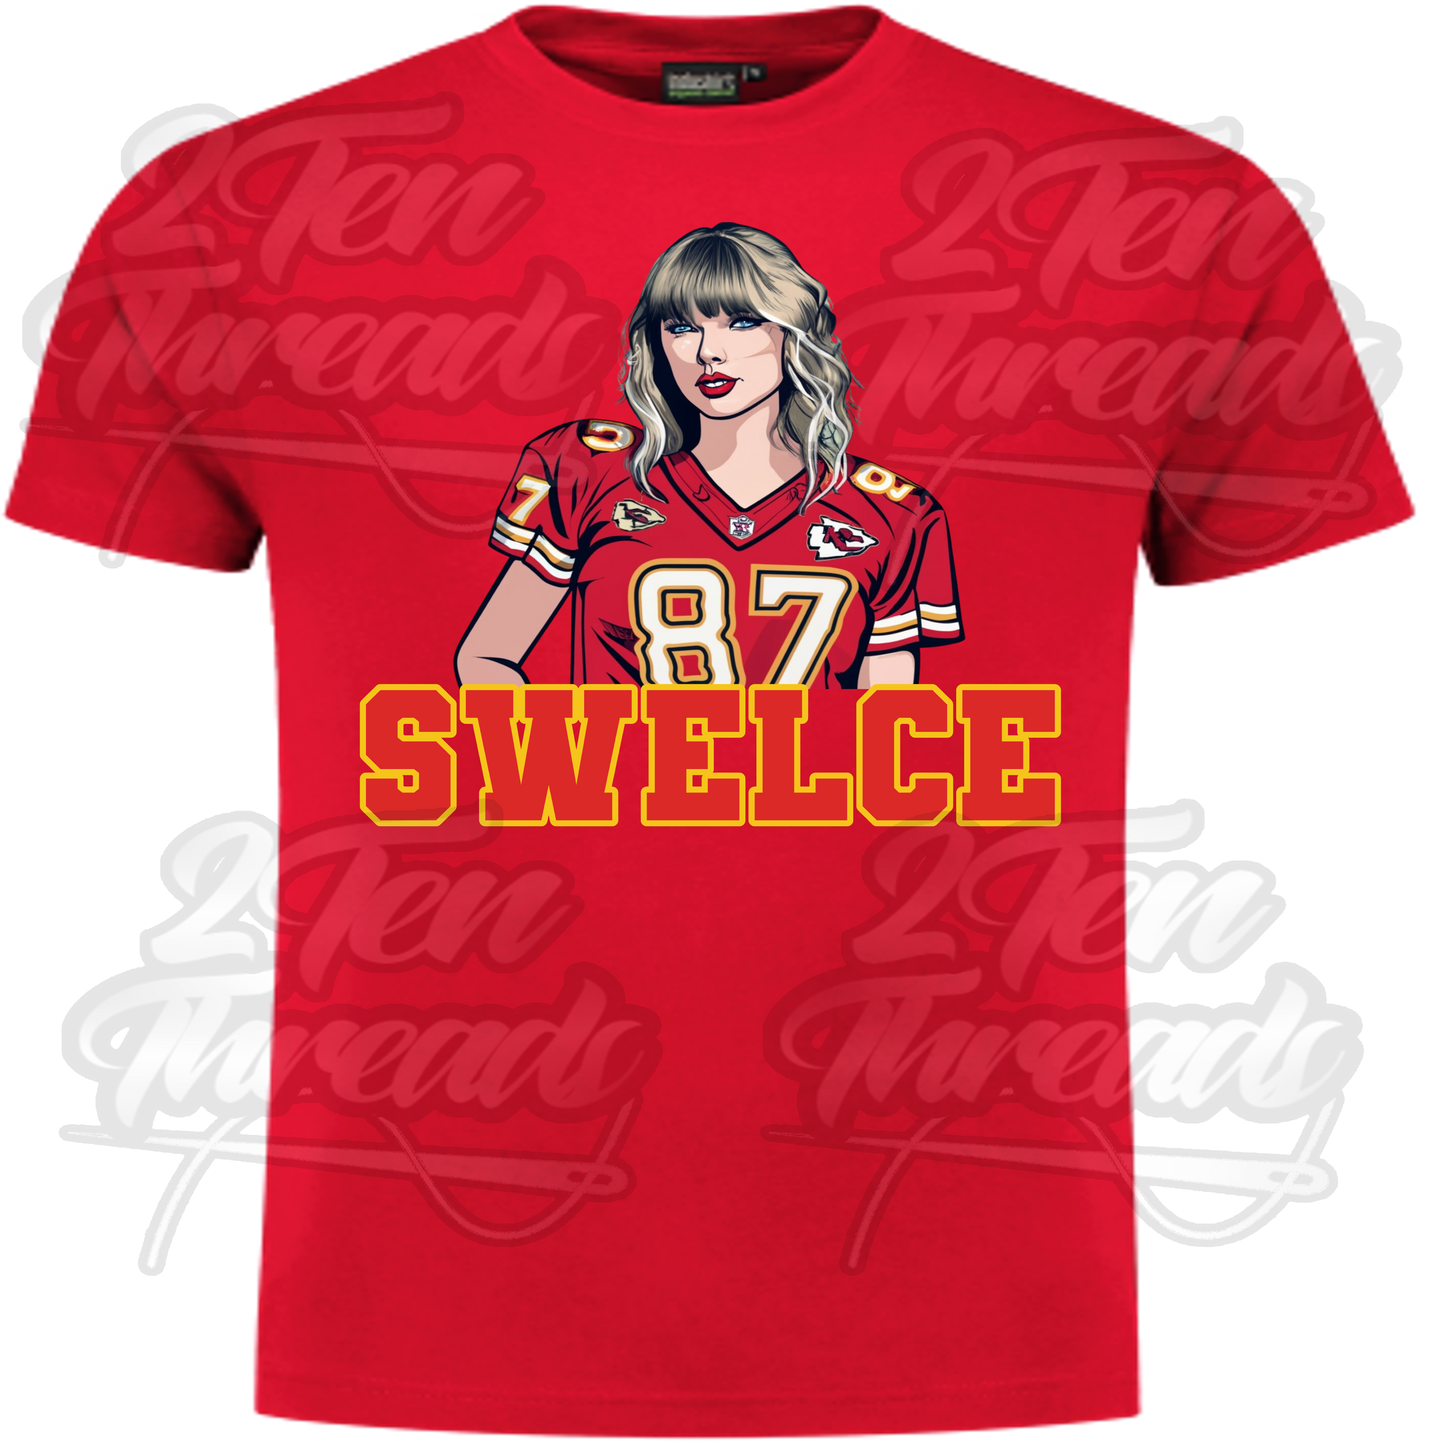 Swelce Taylor Shirt